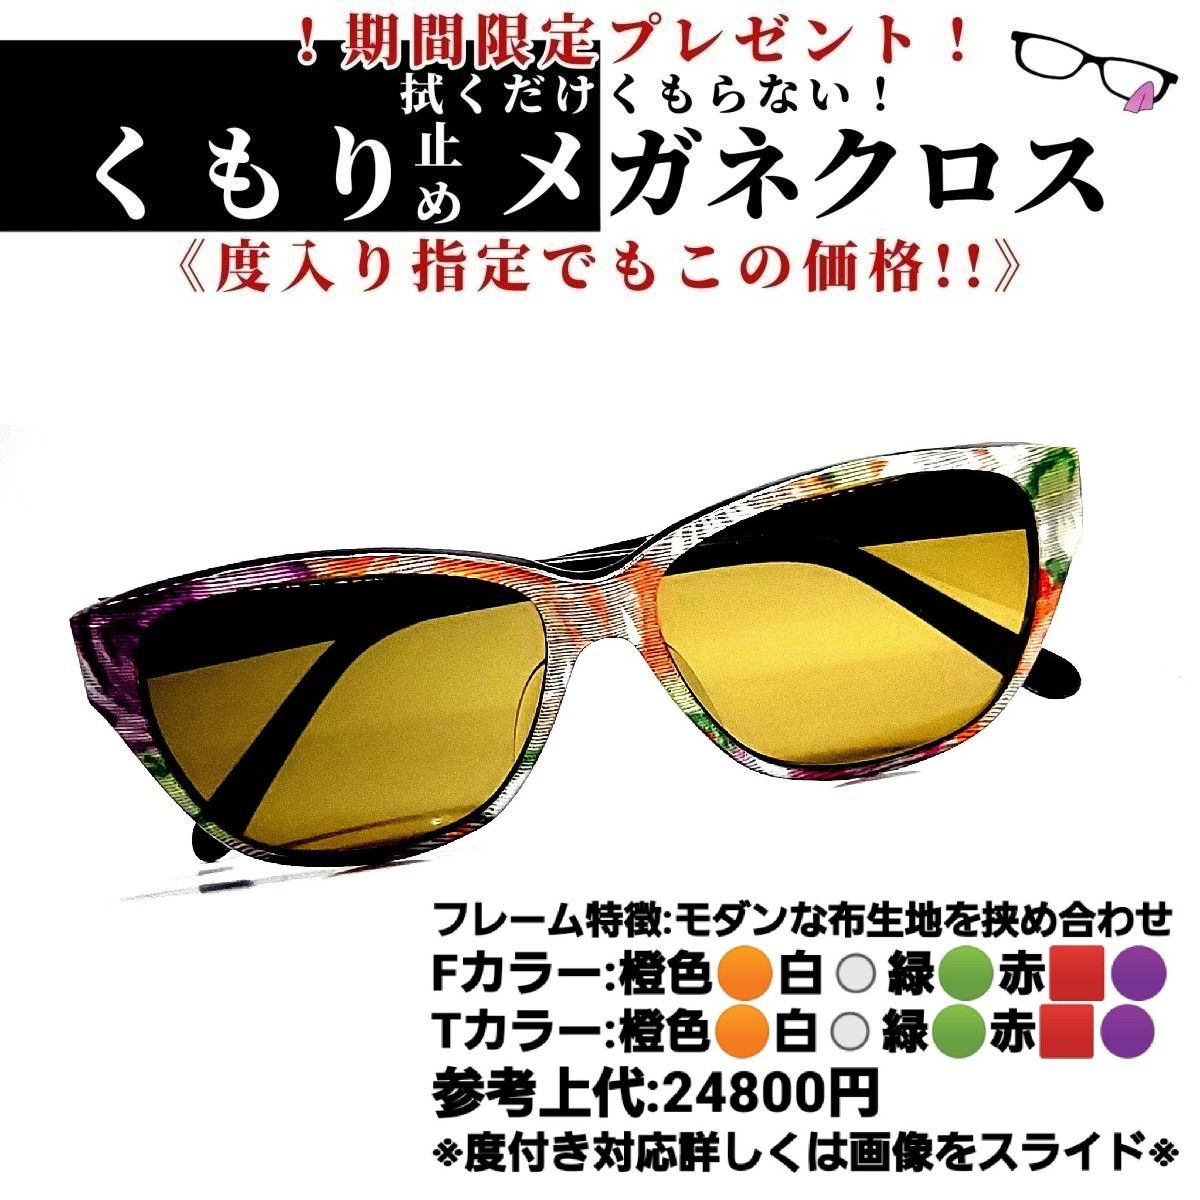 No.2285メガネ ARX【度数入り込み価格】 - メンズ